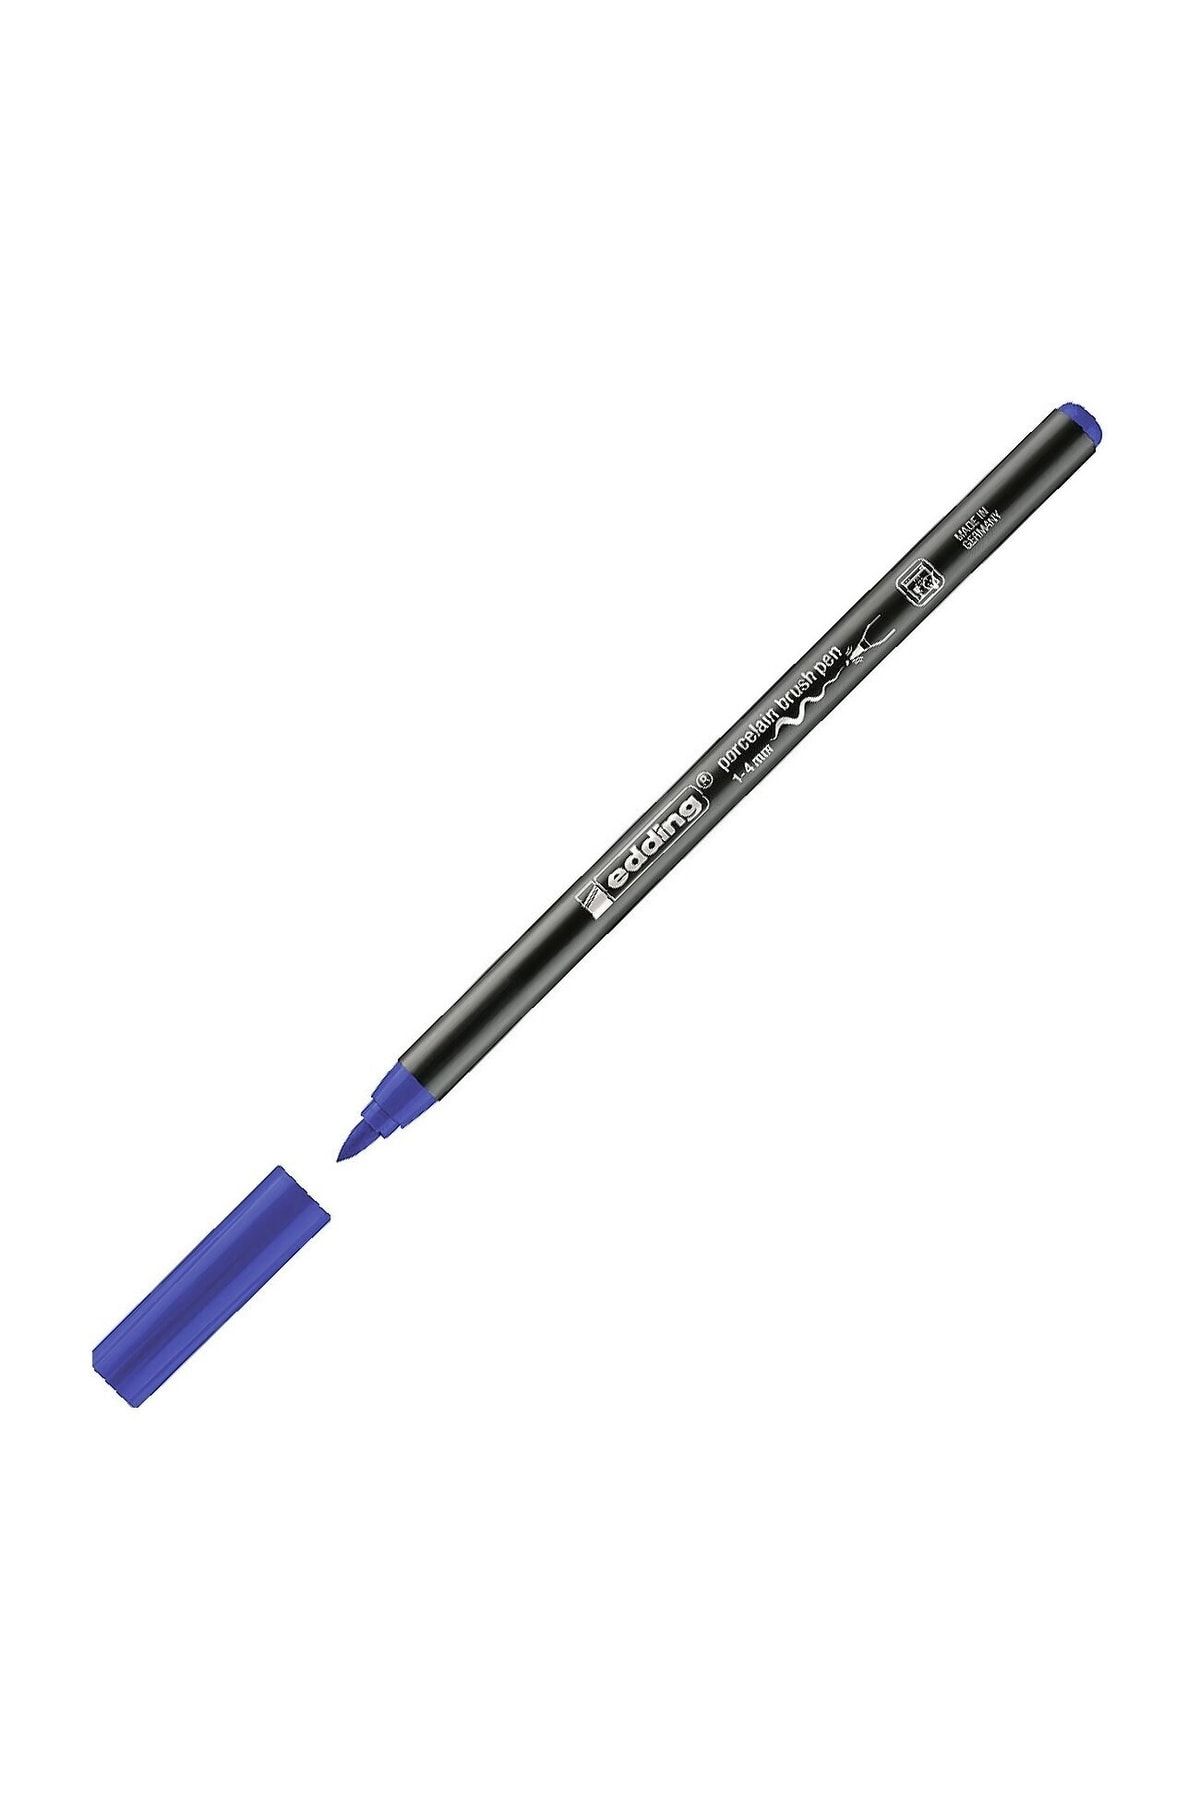 Edding 4200 Porselen Kalemi 1-4mm Mavi